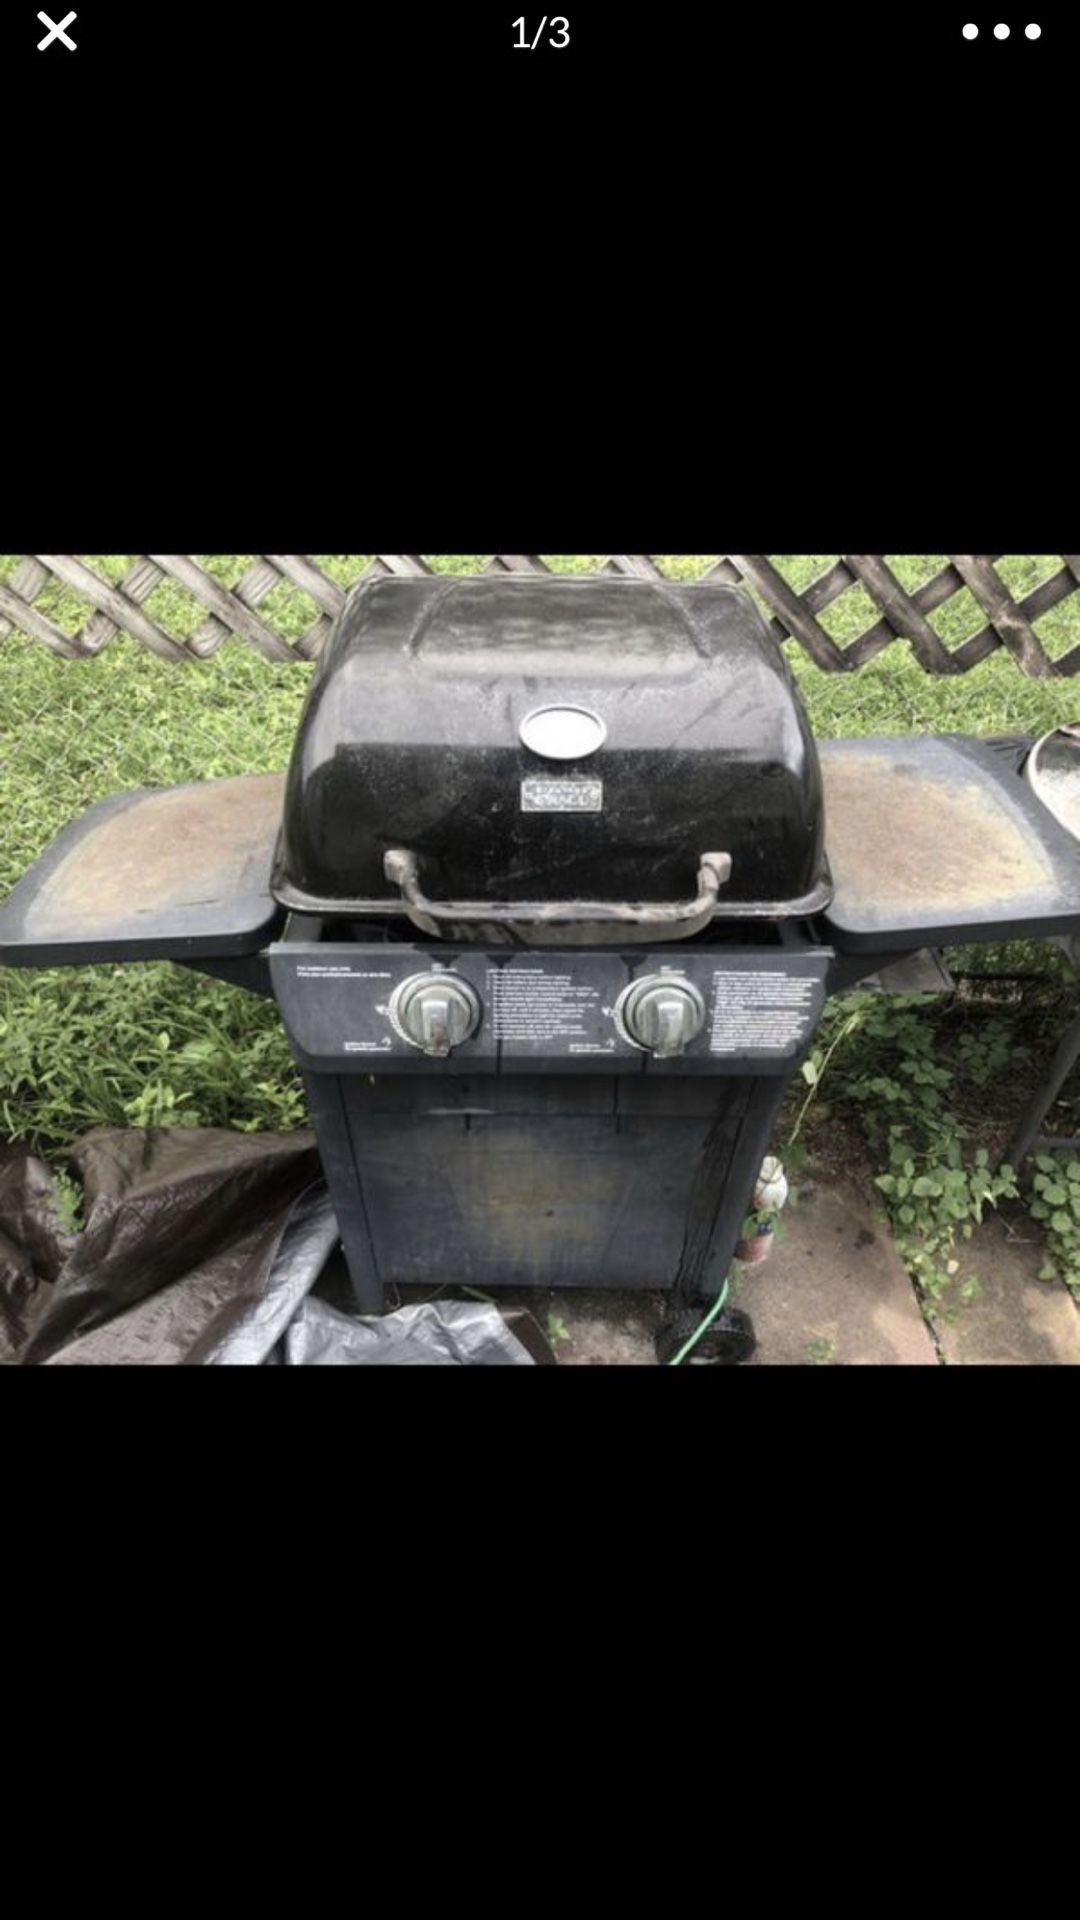 Backyard bbq gas grill. Doesn’t light